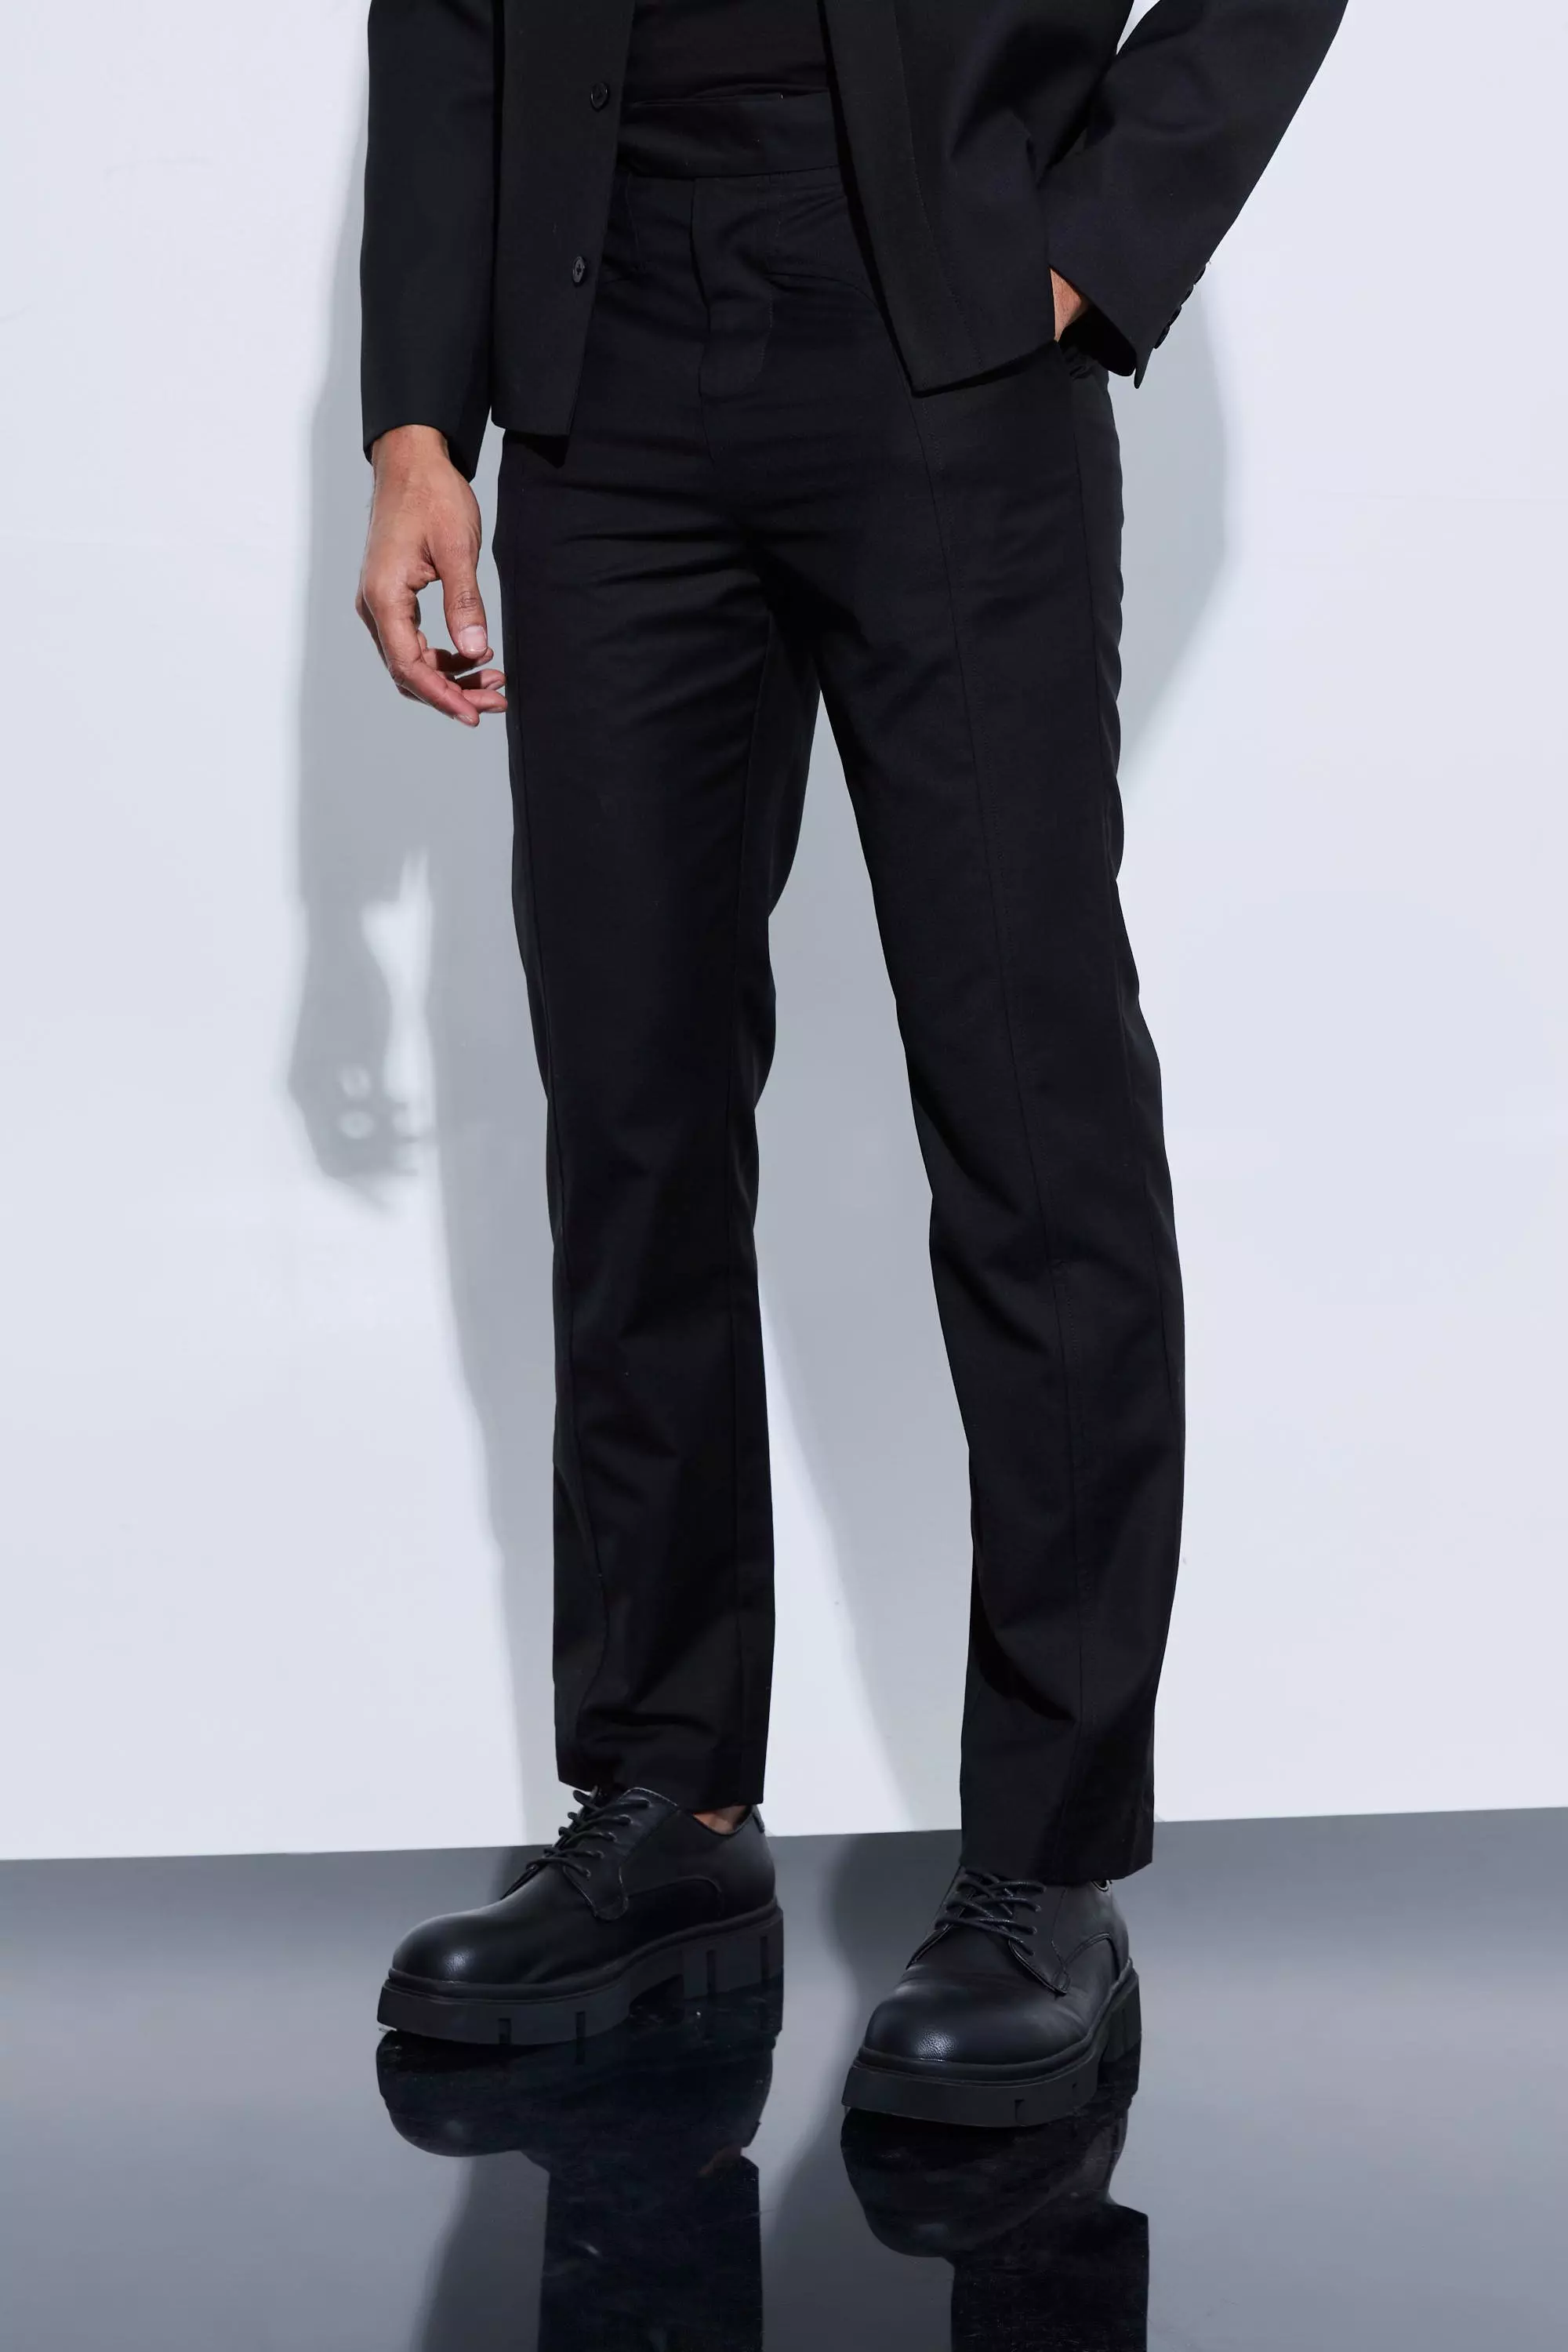 Men's Black Tailored Suits